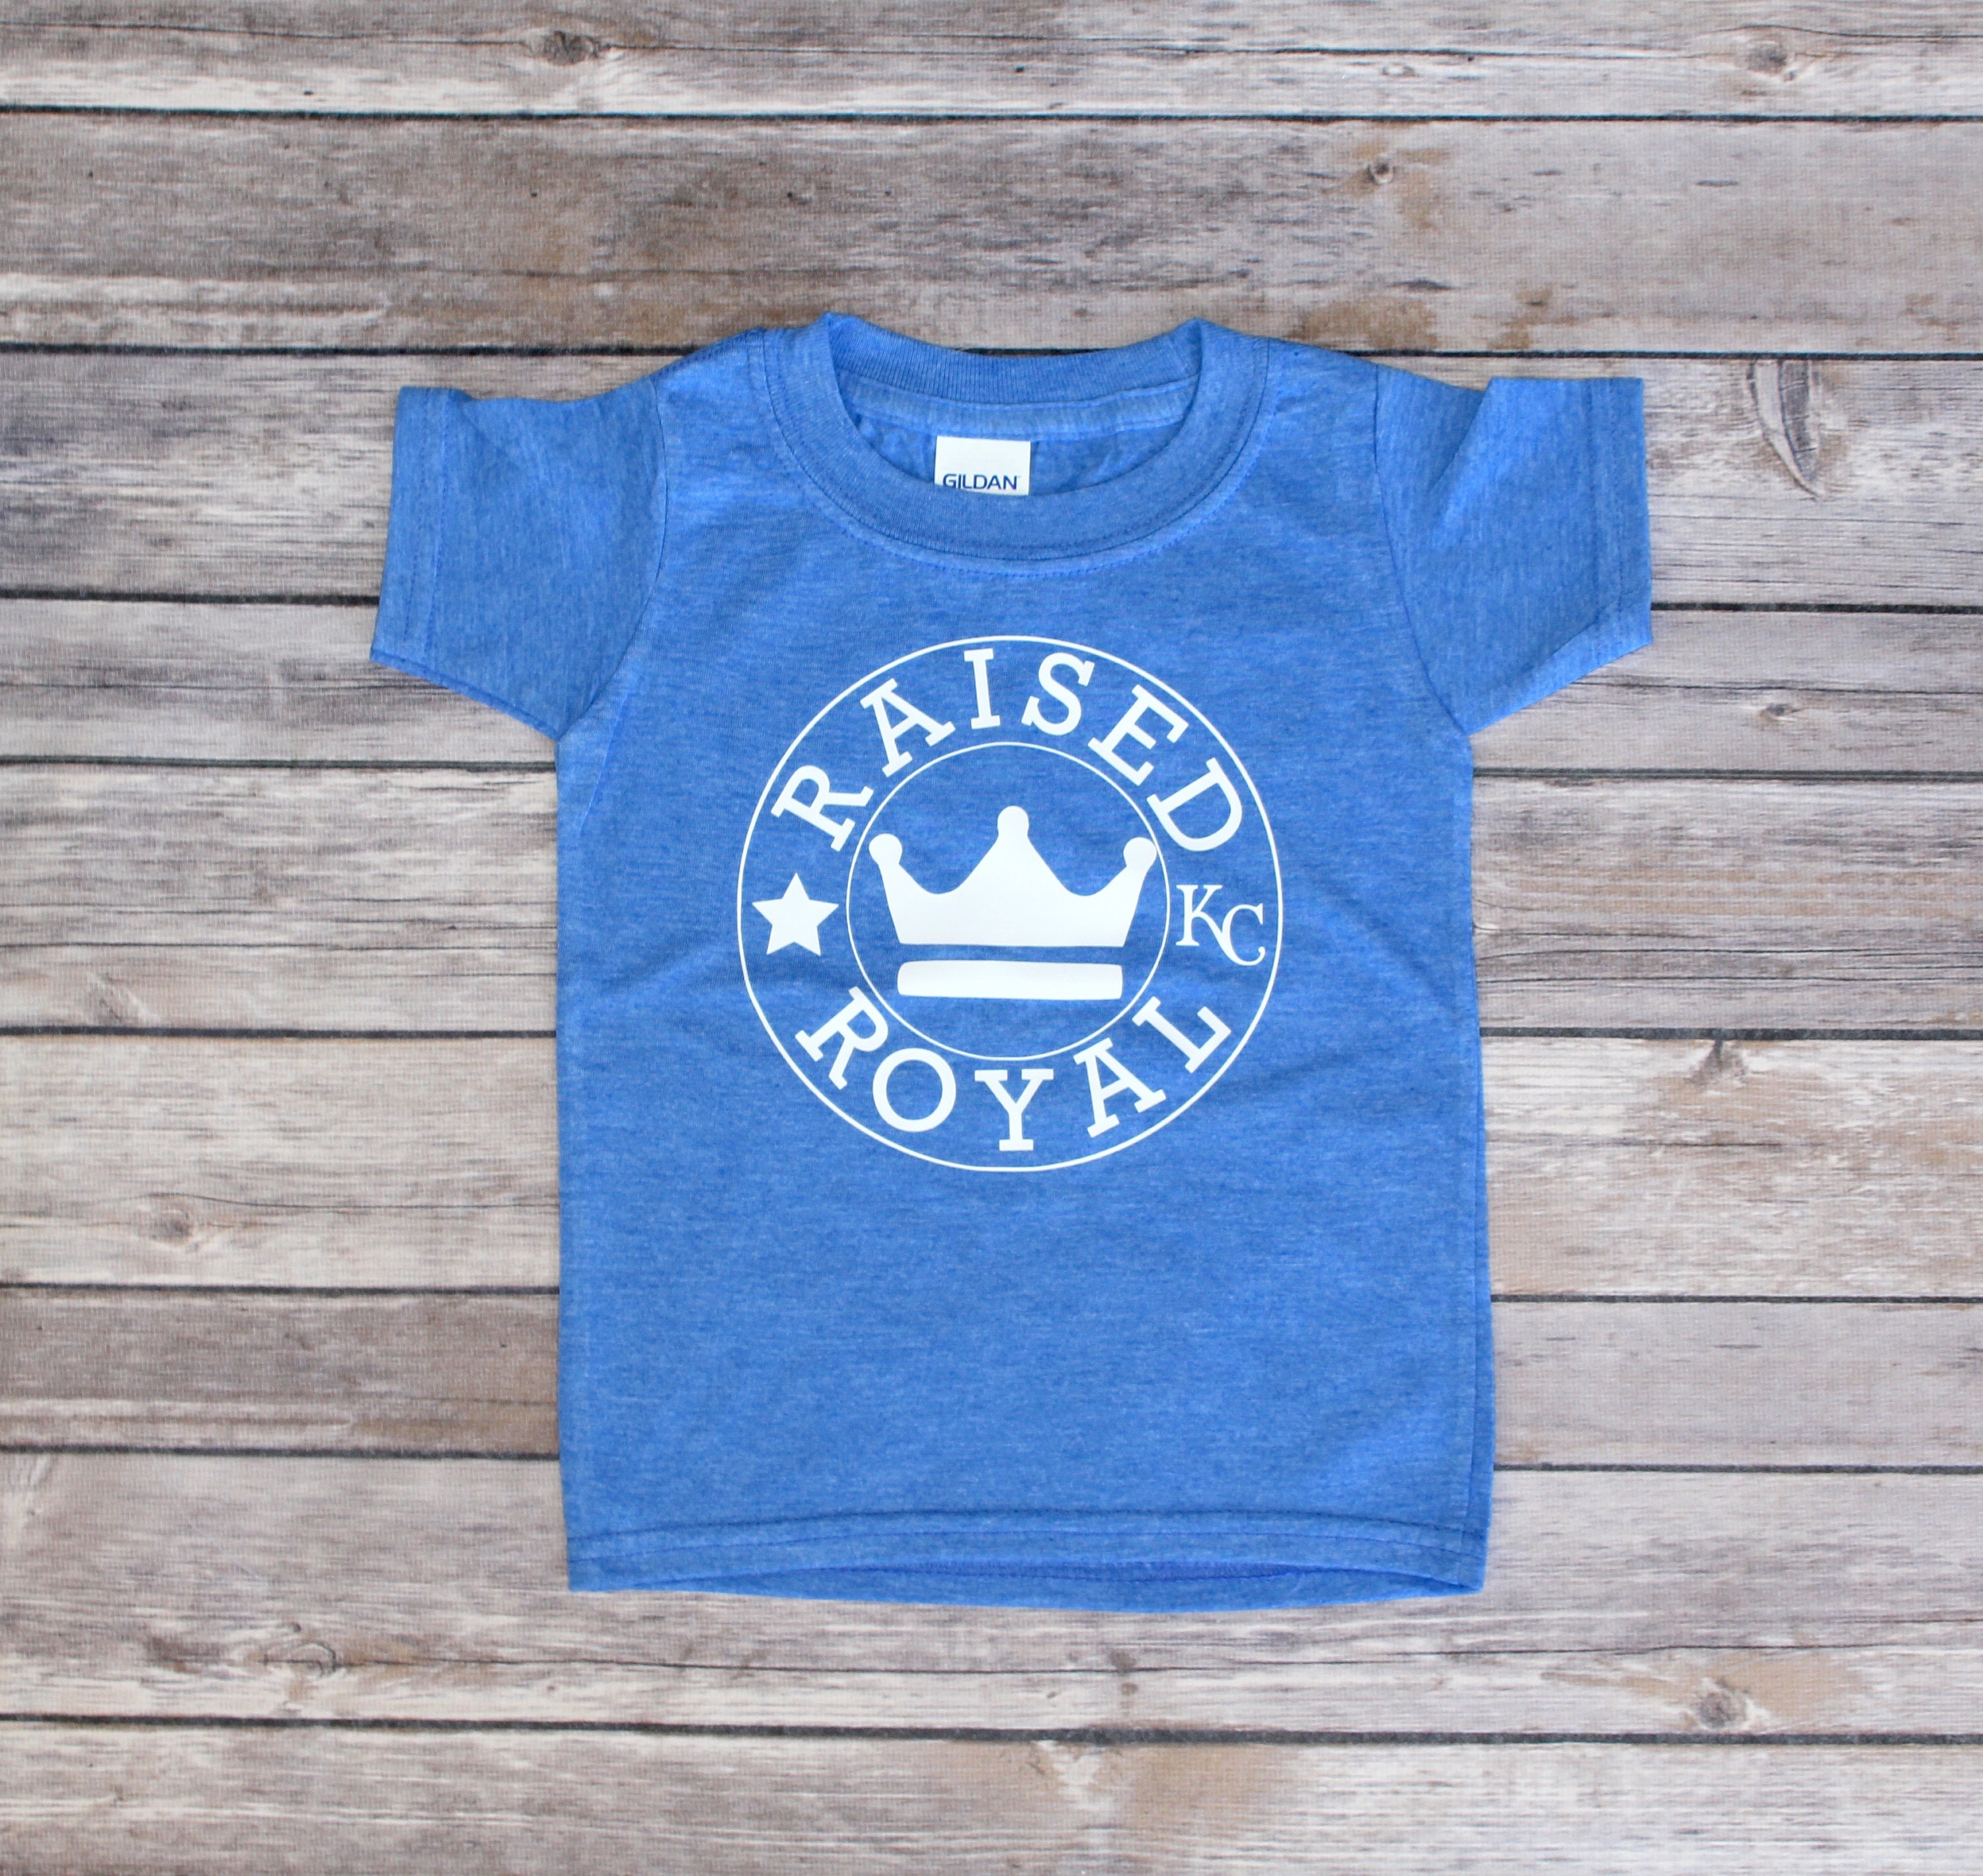 Kansas city royals shirt for toddler or 